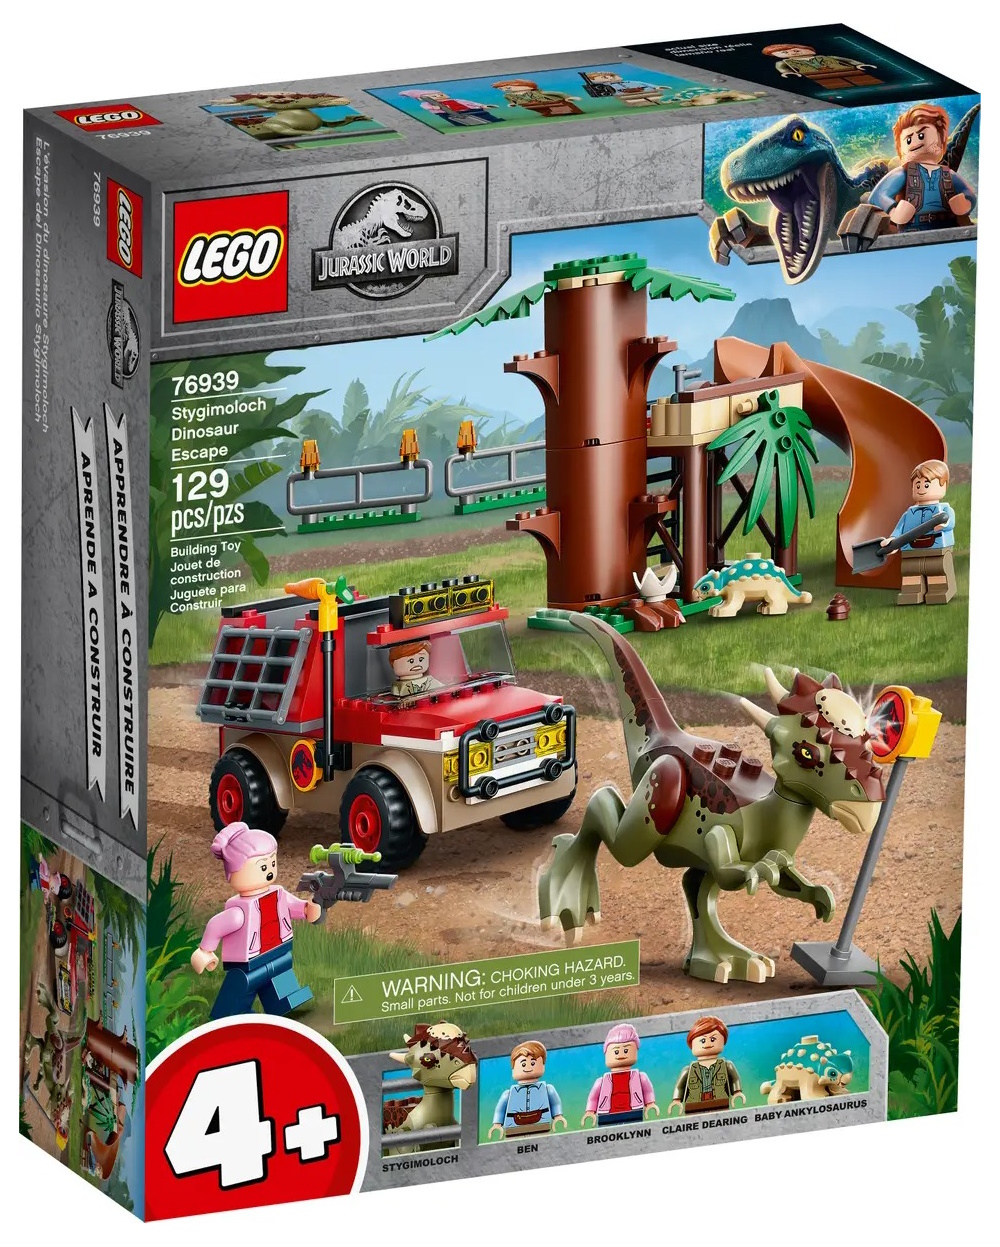 Конструктор LEGO Jurassic World Побег стигимолоха 76939 конструктор lego jurassic world 76939 побег стигимолоха